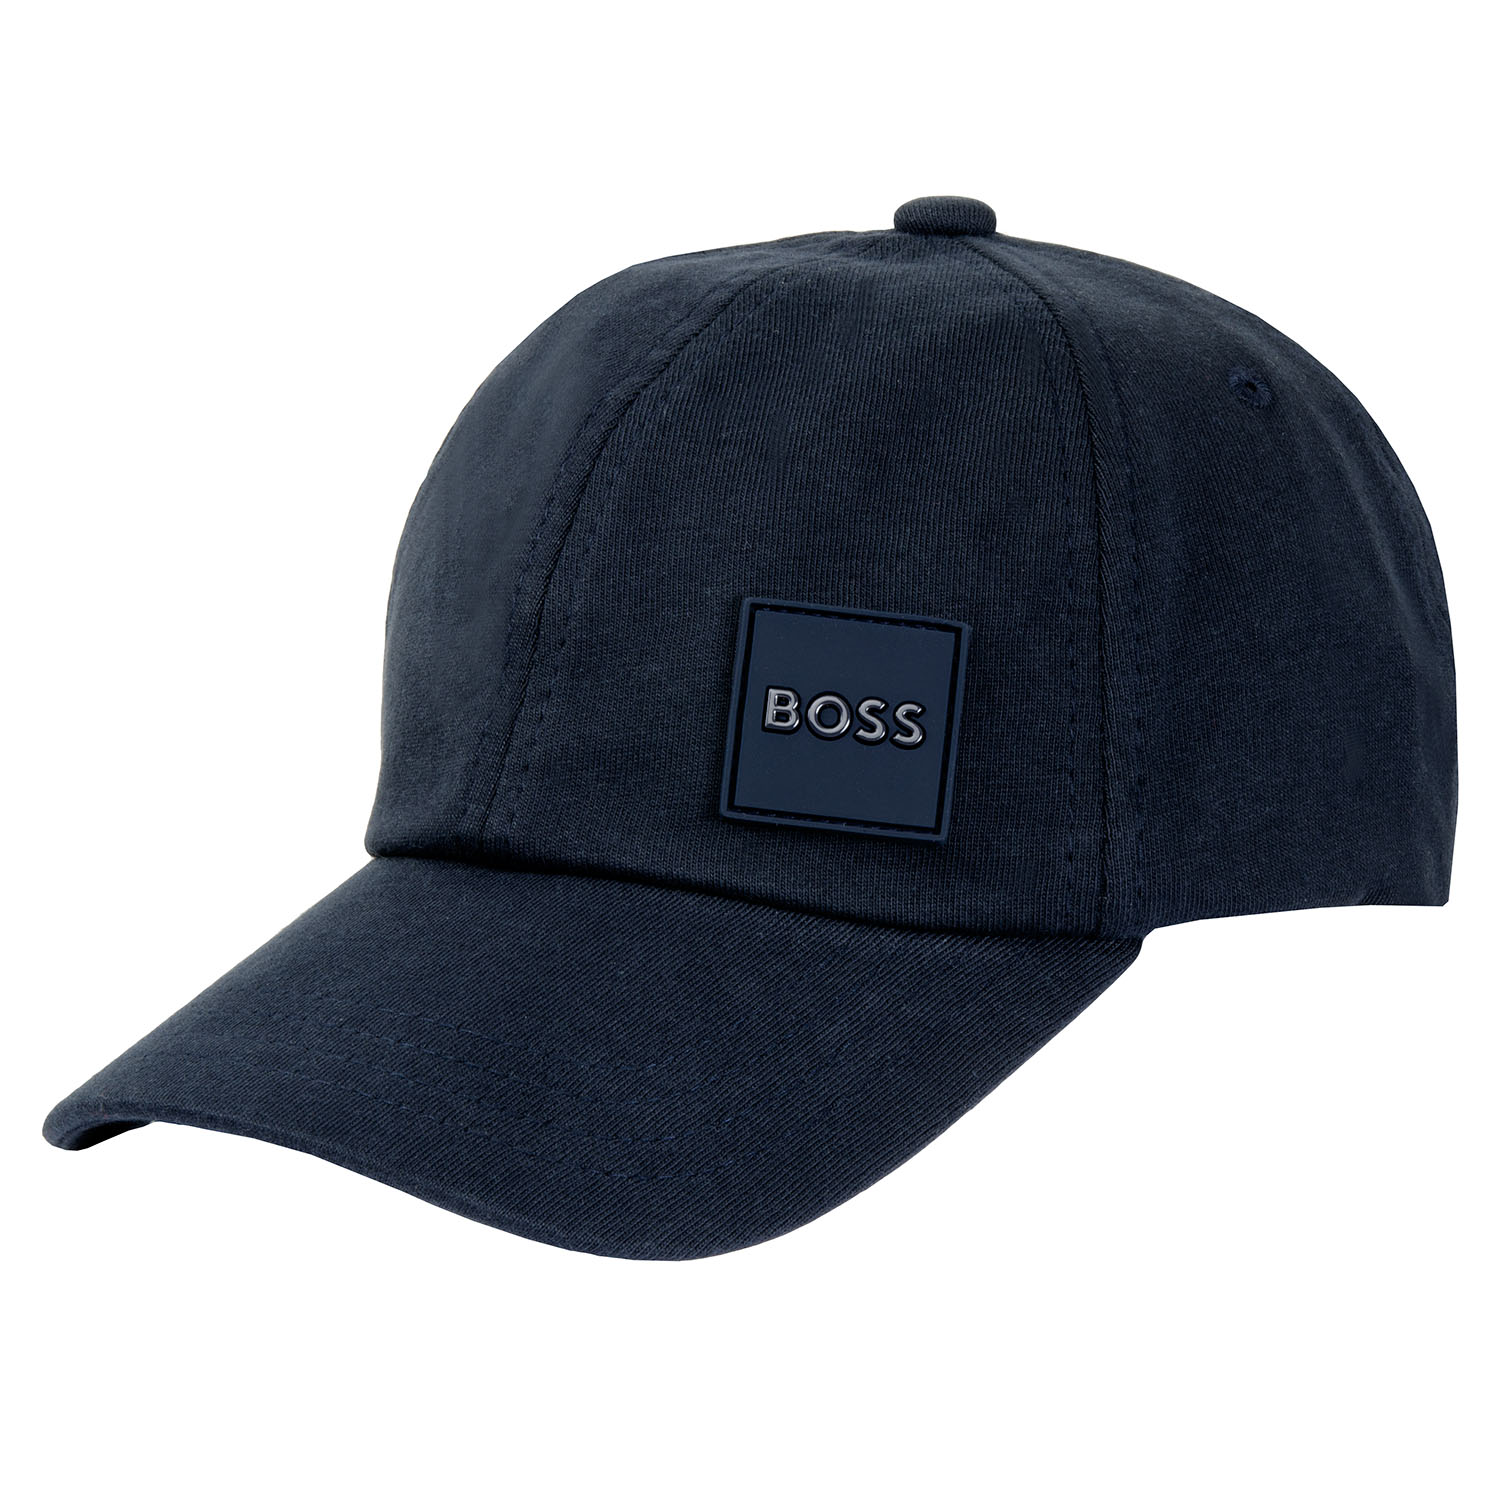 BOSS Sedare Essential 1 Baseball Cap Black 001 | Scottsdale Golf